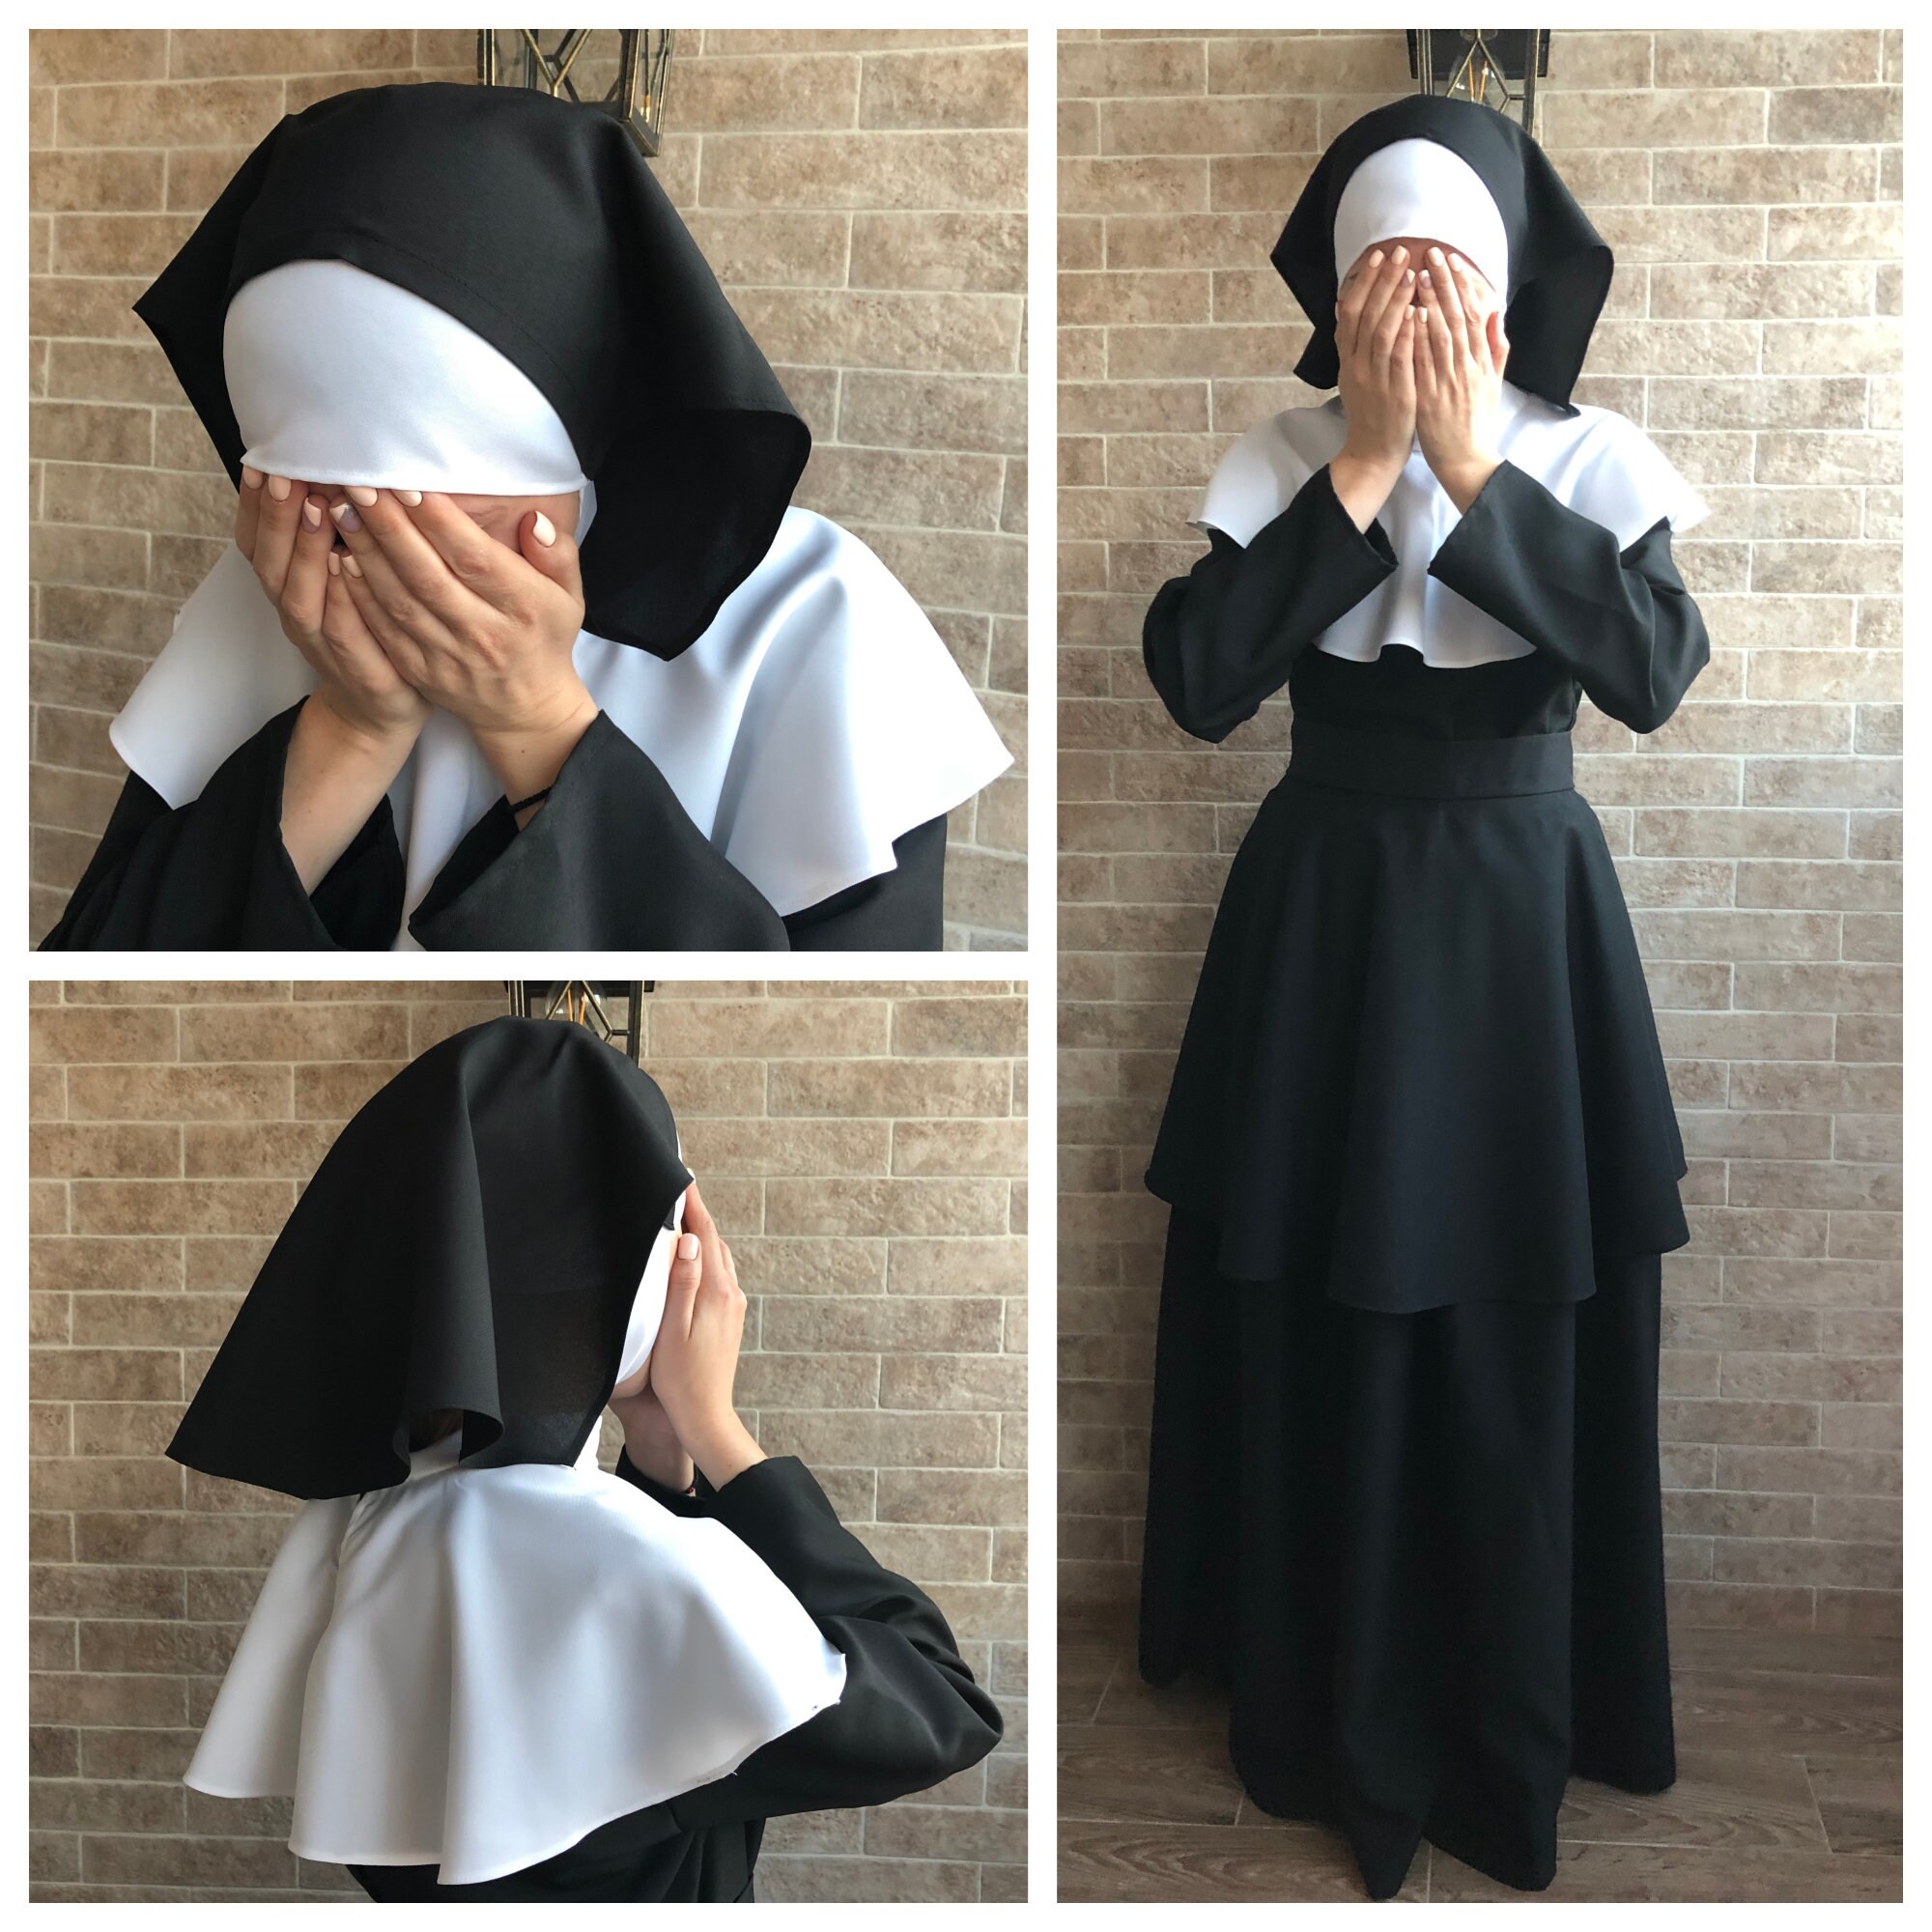 Nun costume Halloween costume Authenic Looking Black Nun Costume Gothic Nun...